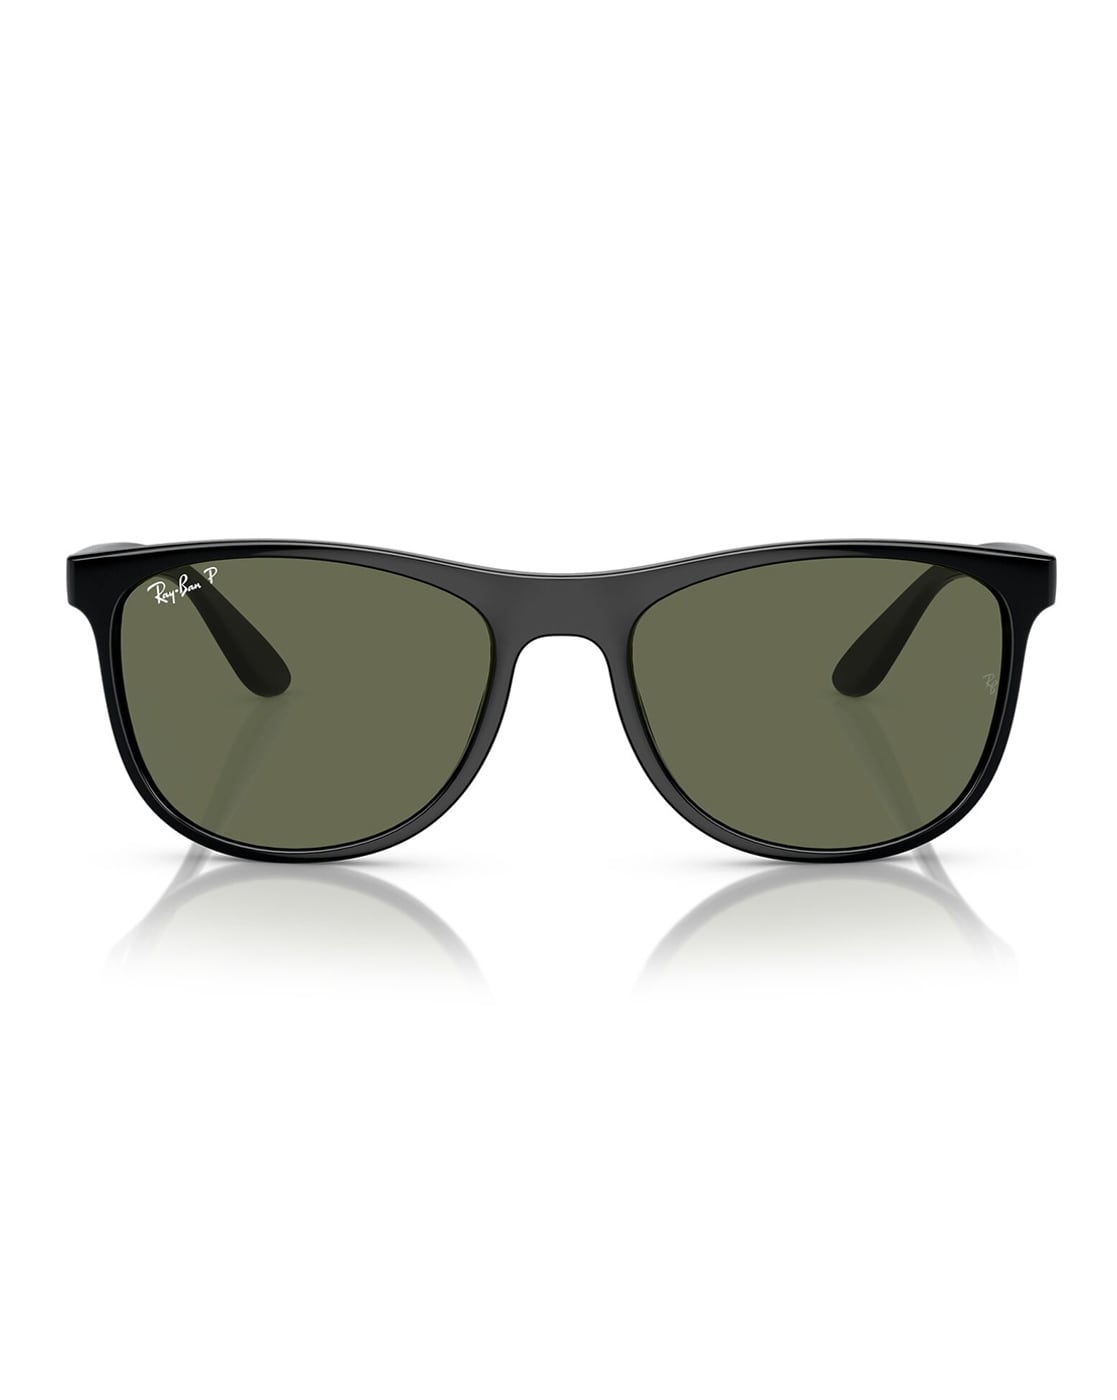 Ray Ban Sunglasses Online at Best Price | Titan Eye+